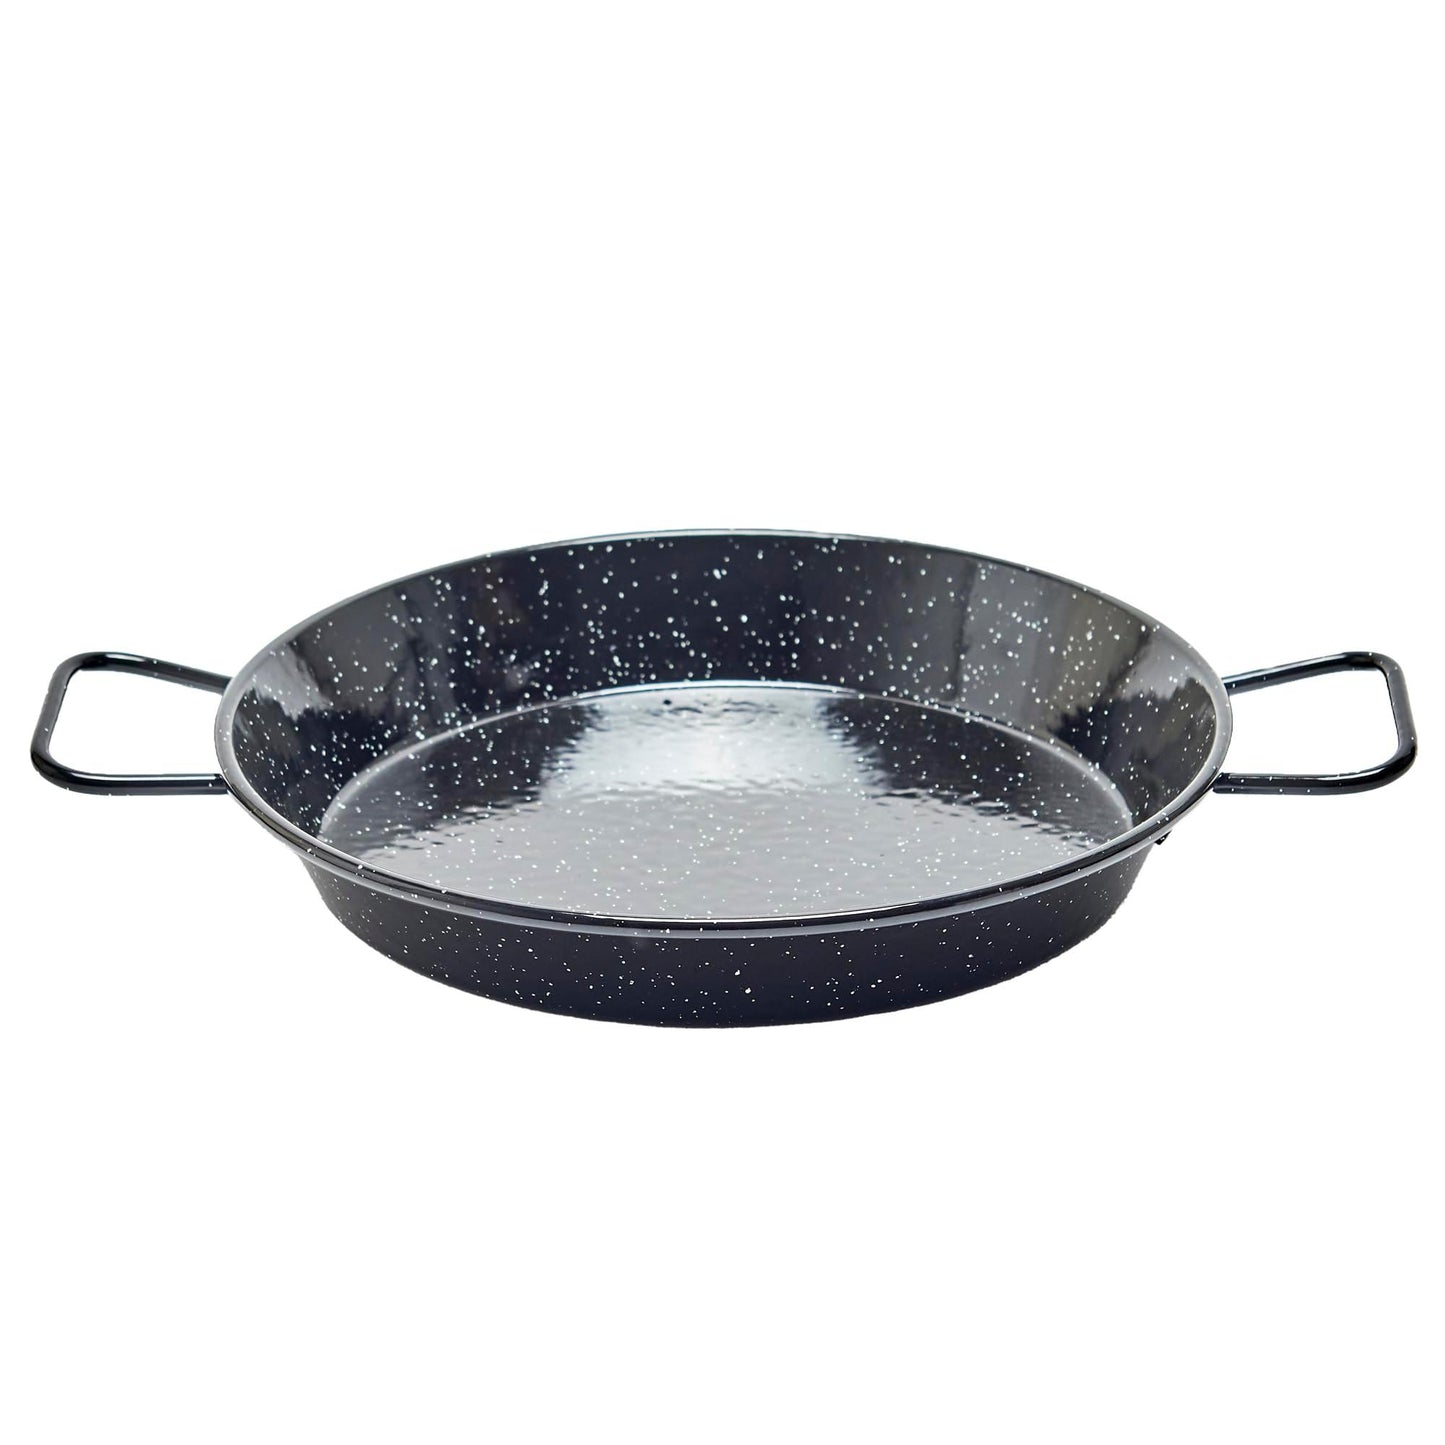 Garcima Petite 4-Inch Enameled Steel Paella Pan for serving tapas, 10cm - CookCave